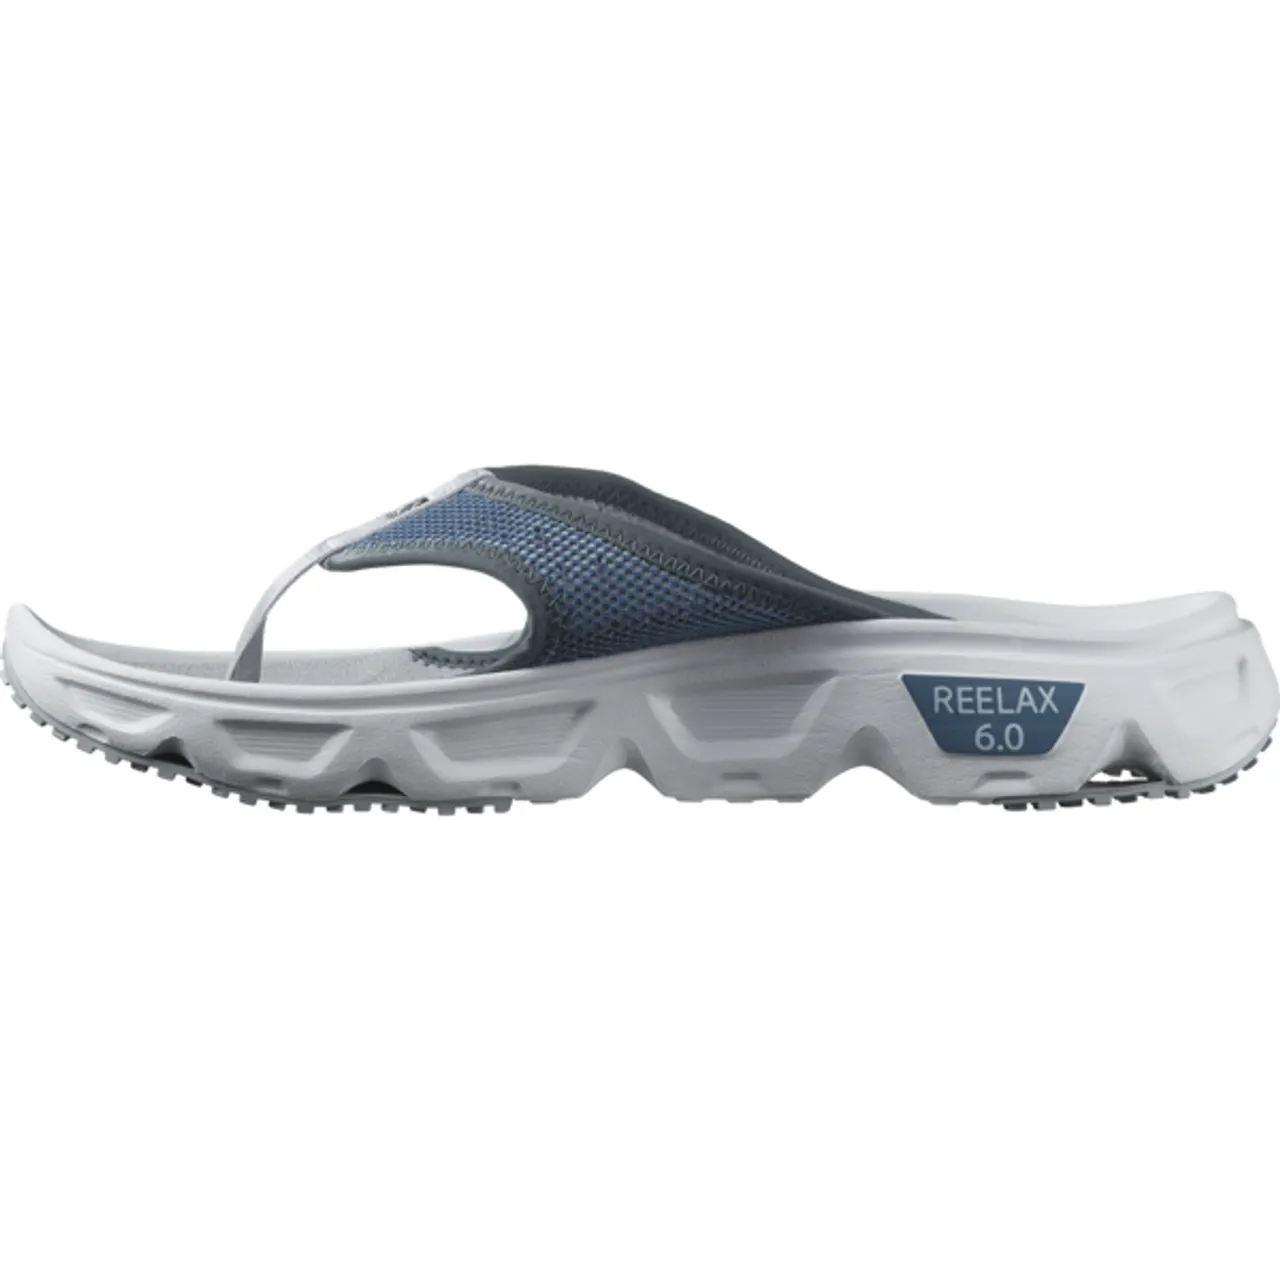 Badesandale SALOMON "REELAX BREAK 6.0" Gr. 47, blau (rauchblau, weiß) Schuhe Zehentrenner Stoffschuhe Erholungsschuhe